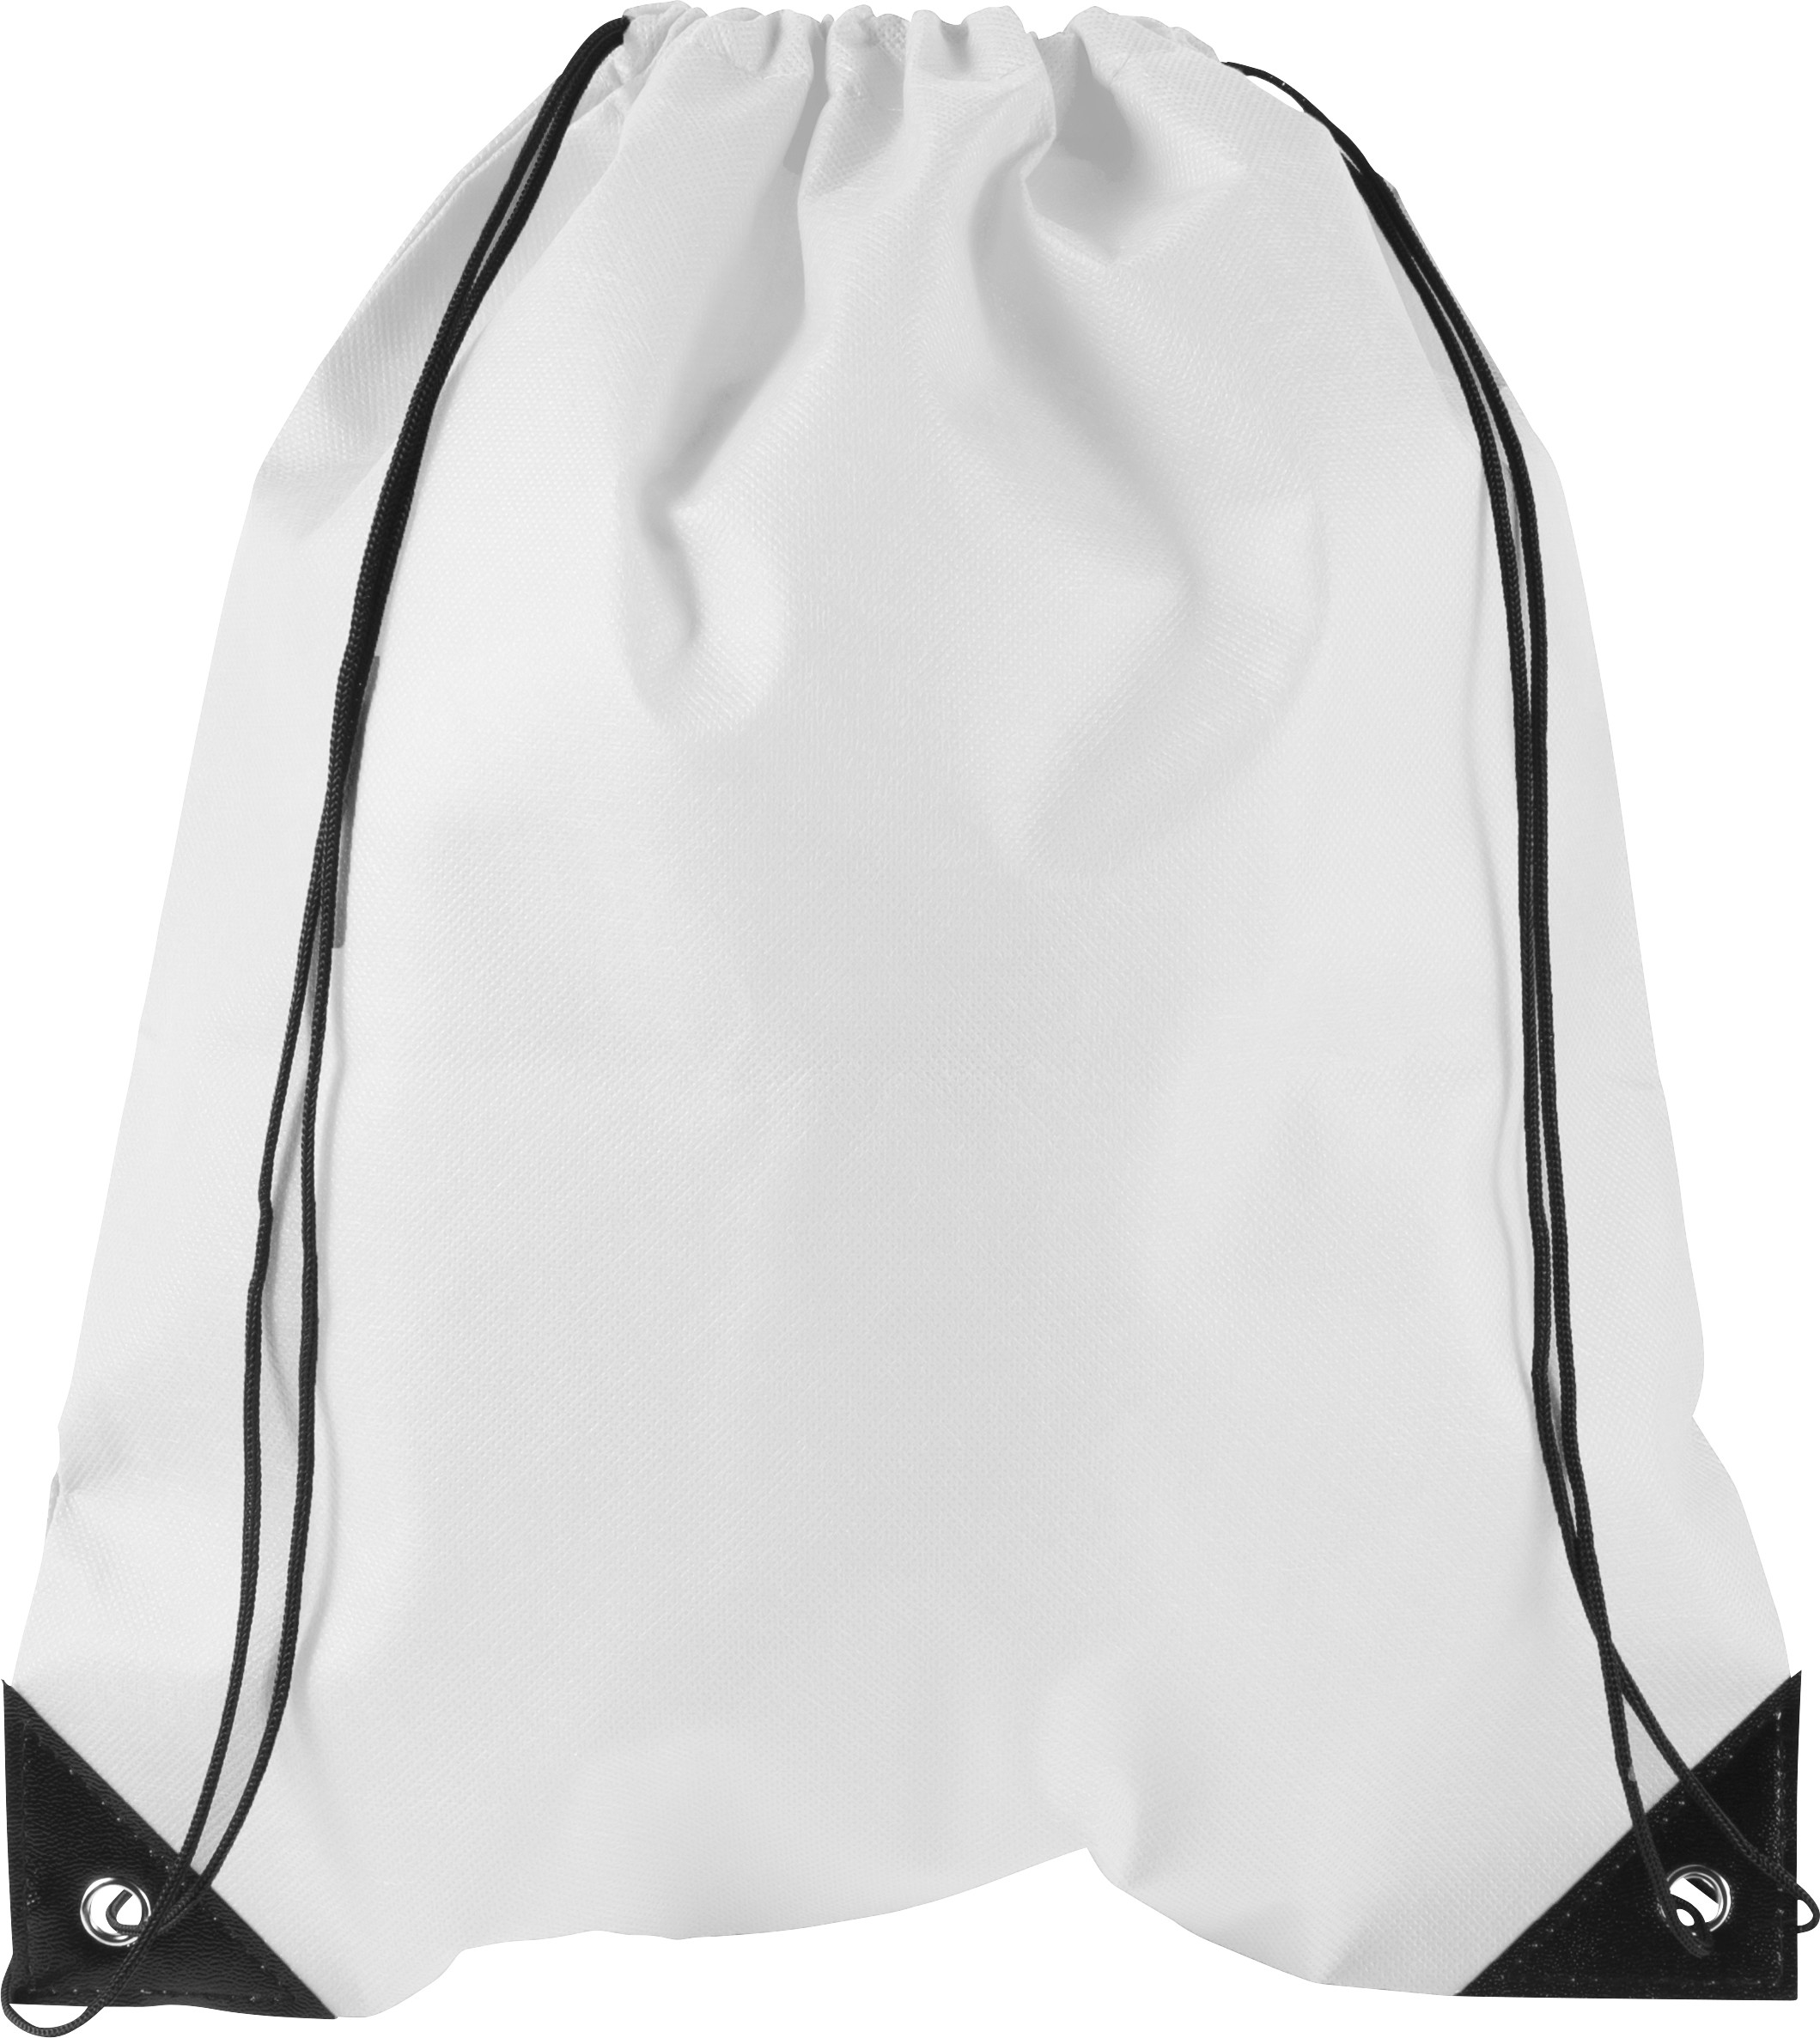 Netkani ruksak (80 gr/m2) s vezicama, bijeli s tiskom 